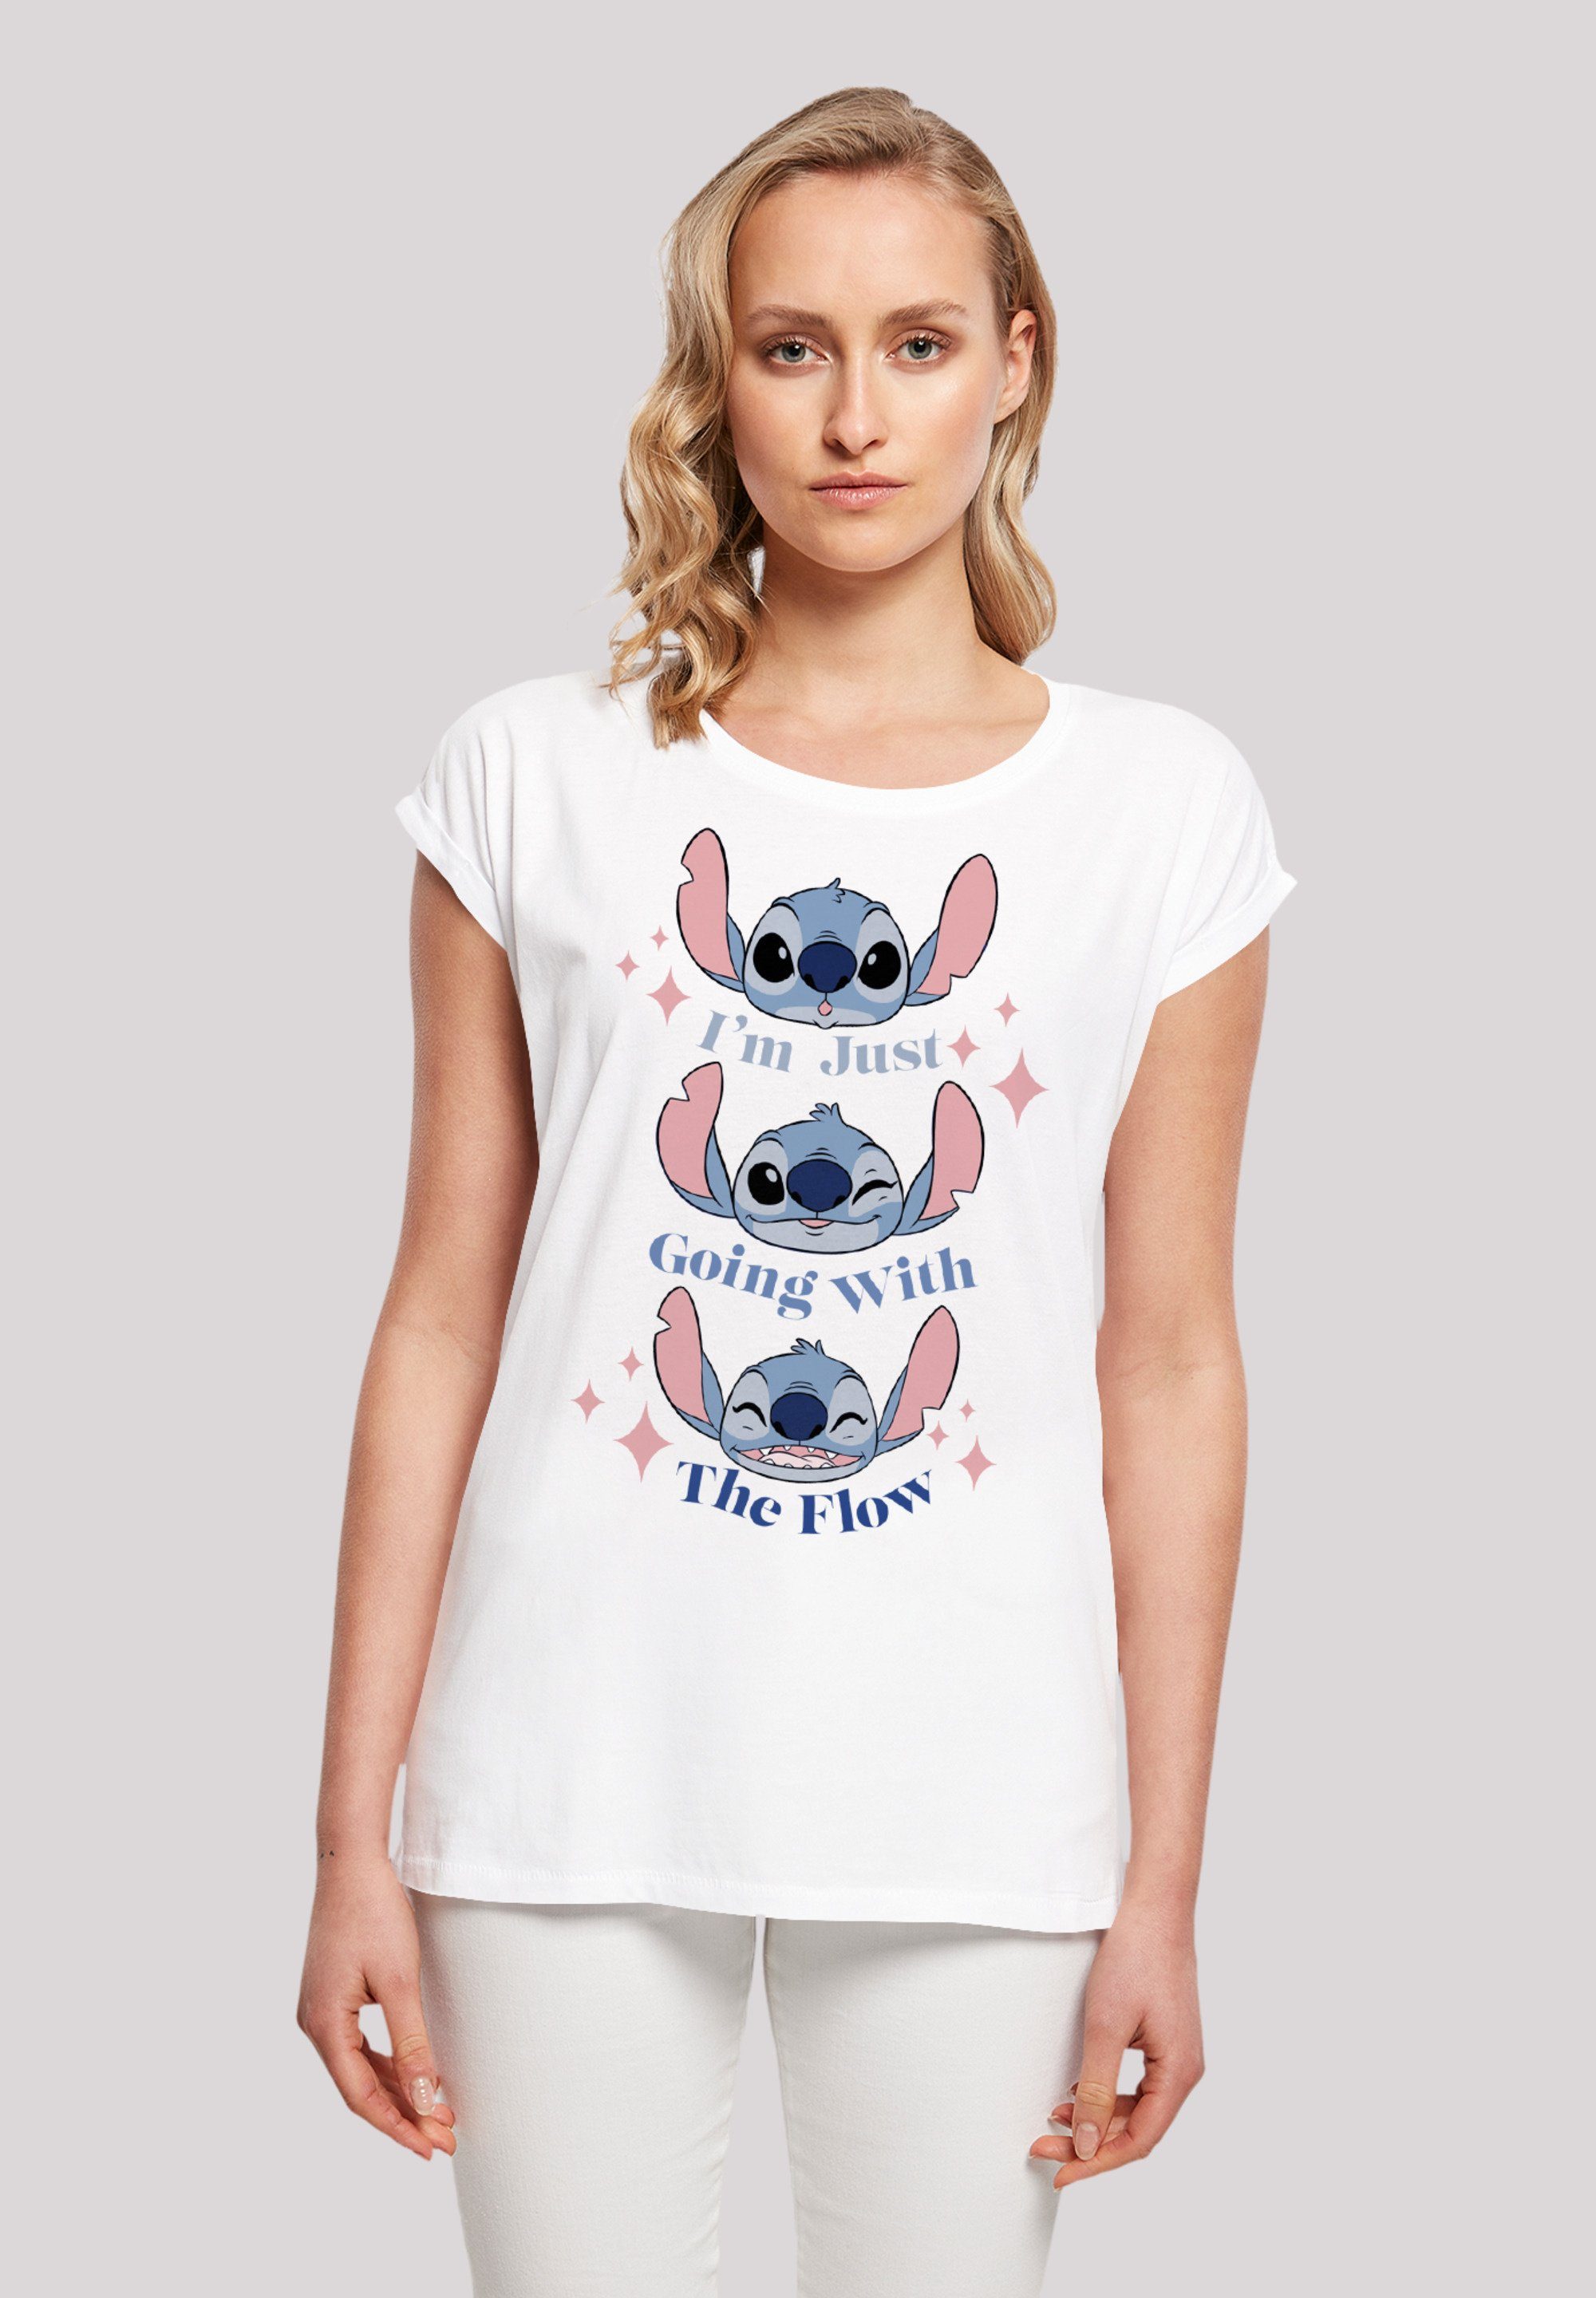 F4NT4STIC T-Shirt Disney Lilo & Stitch Going With The Flow Premium Qualität